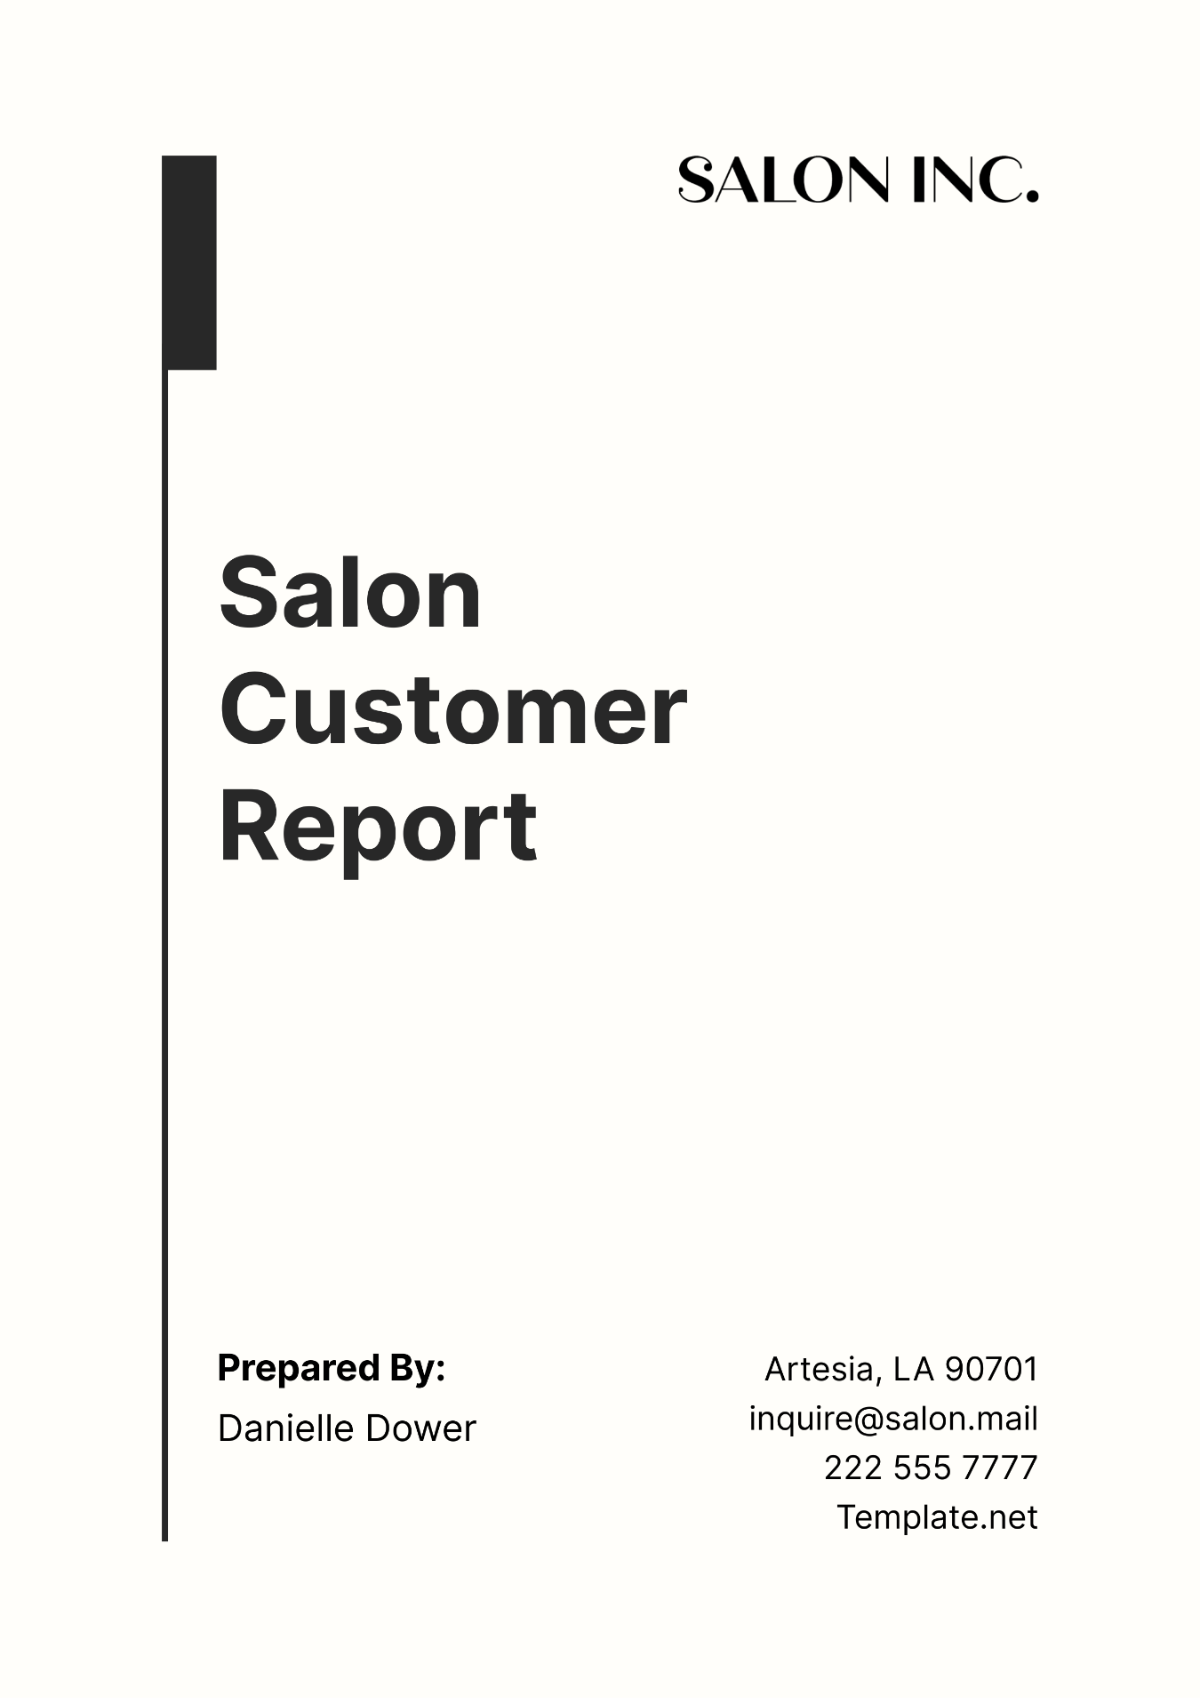 Salon Customer Report Template